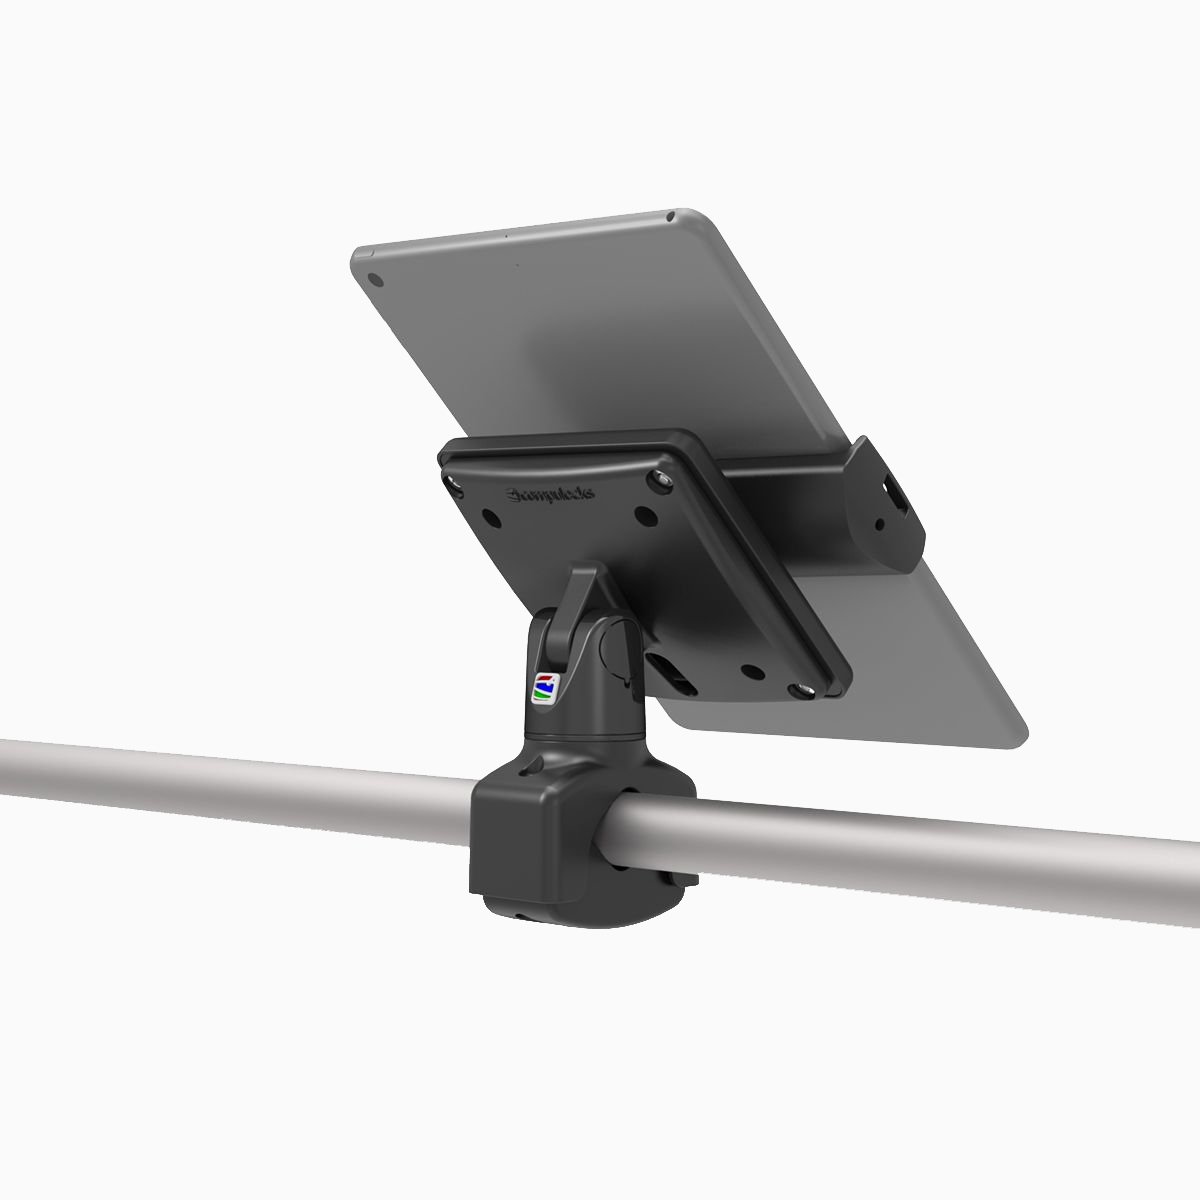 Maclocks Universal Tablet Rail Mount – Cling Rail